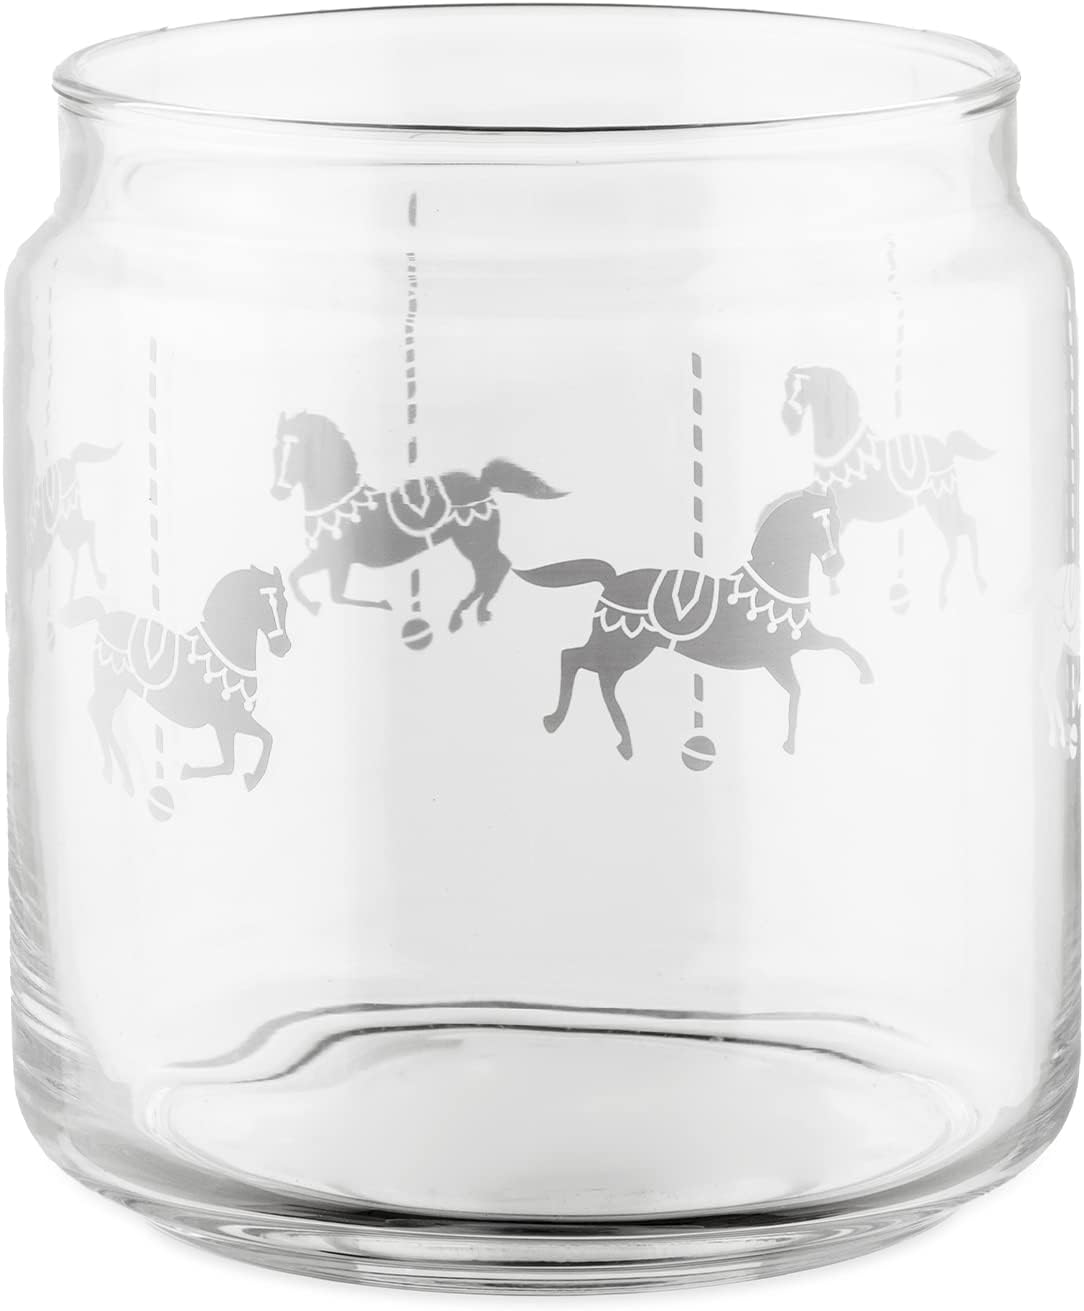 Alessi Decorative Circus Jar - MW30/75